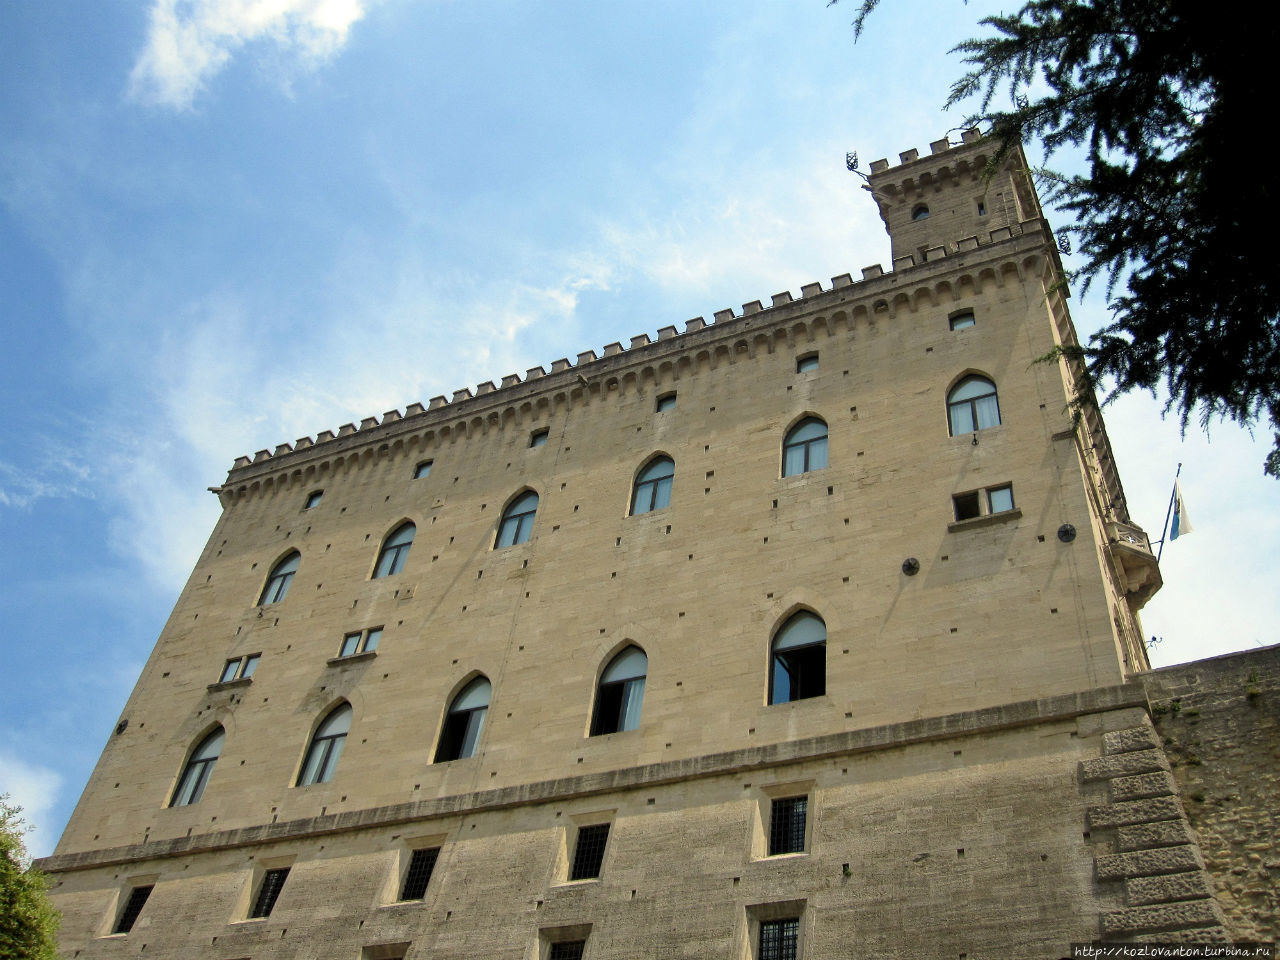 Вид Палаццо Публико со стороны via Eugippo. Сан-Марино, Сан-Марино